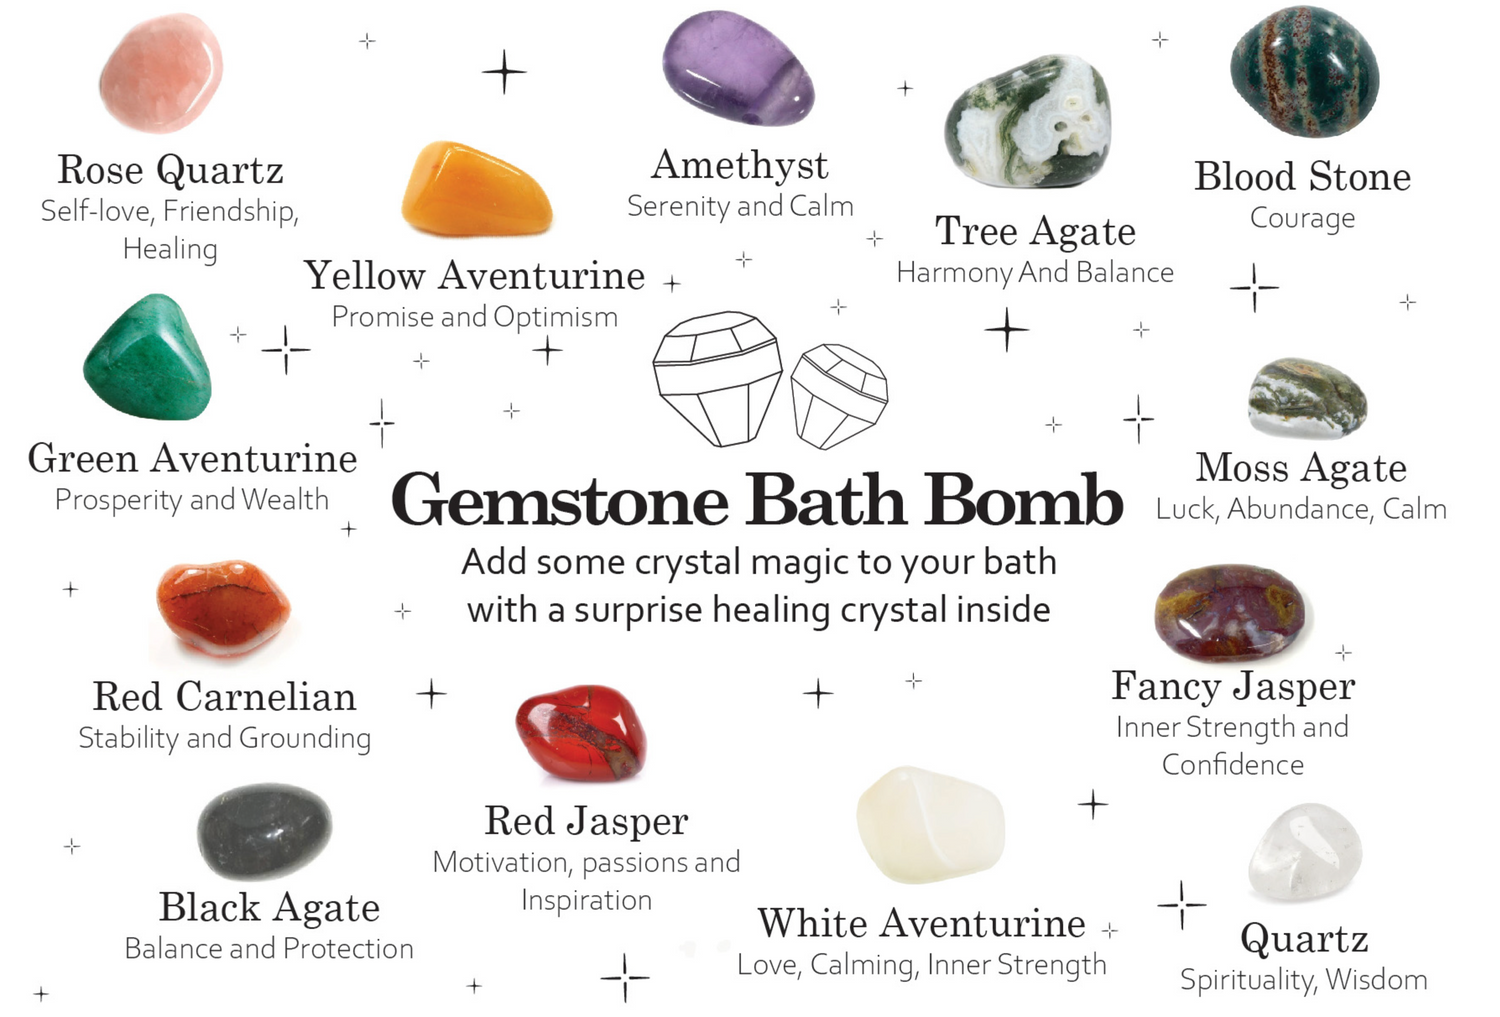 Gemstone Bath Bomb - Extreme Fragrance